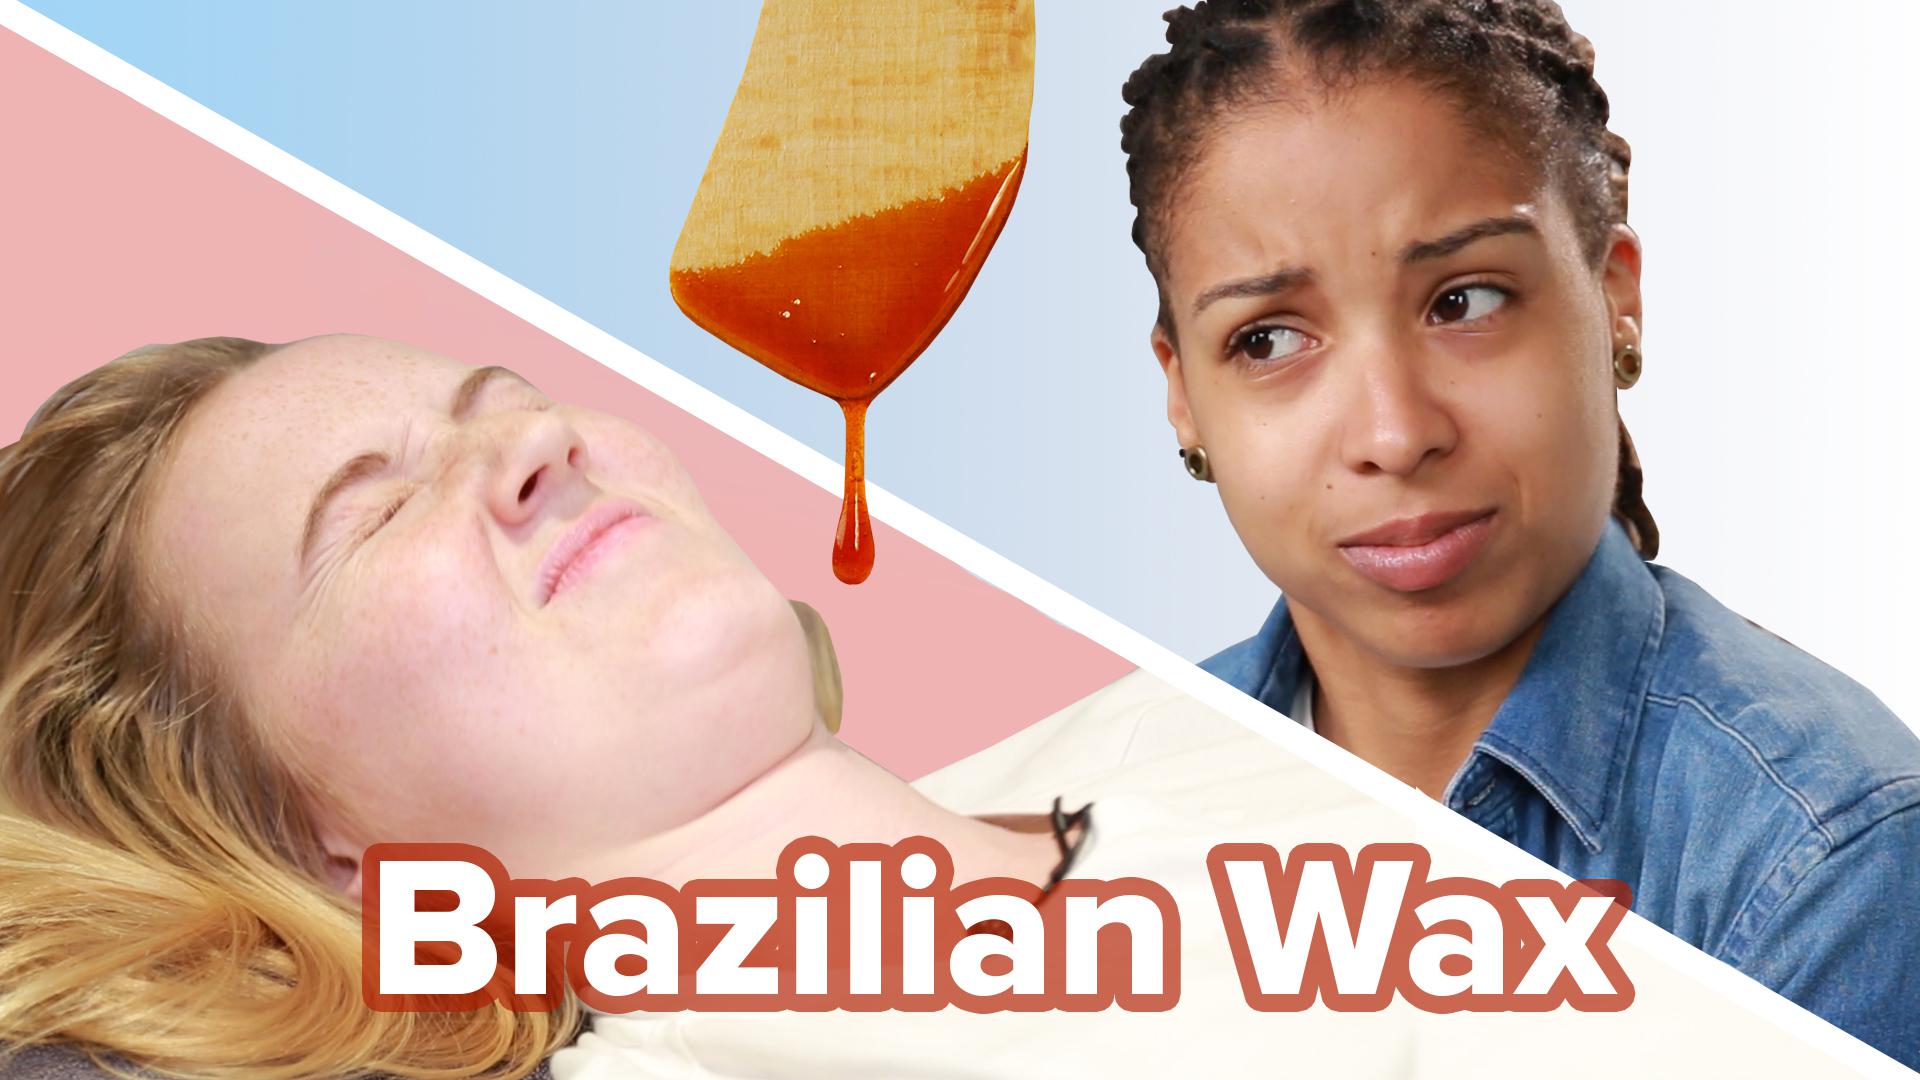 brendan landy recommends mens brazilian waxing videos pic